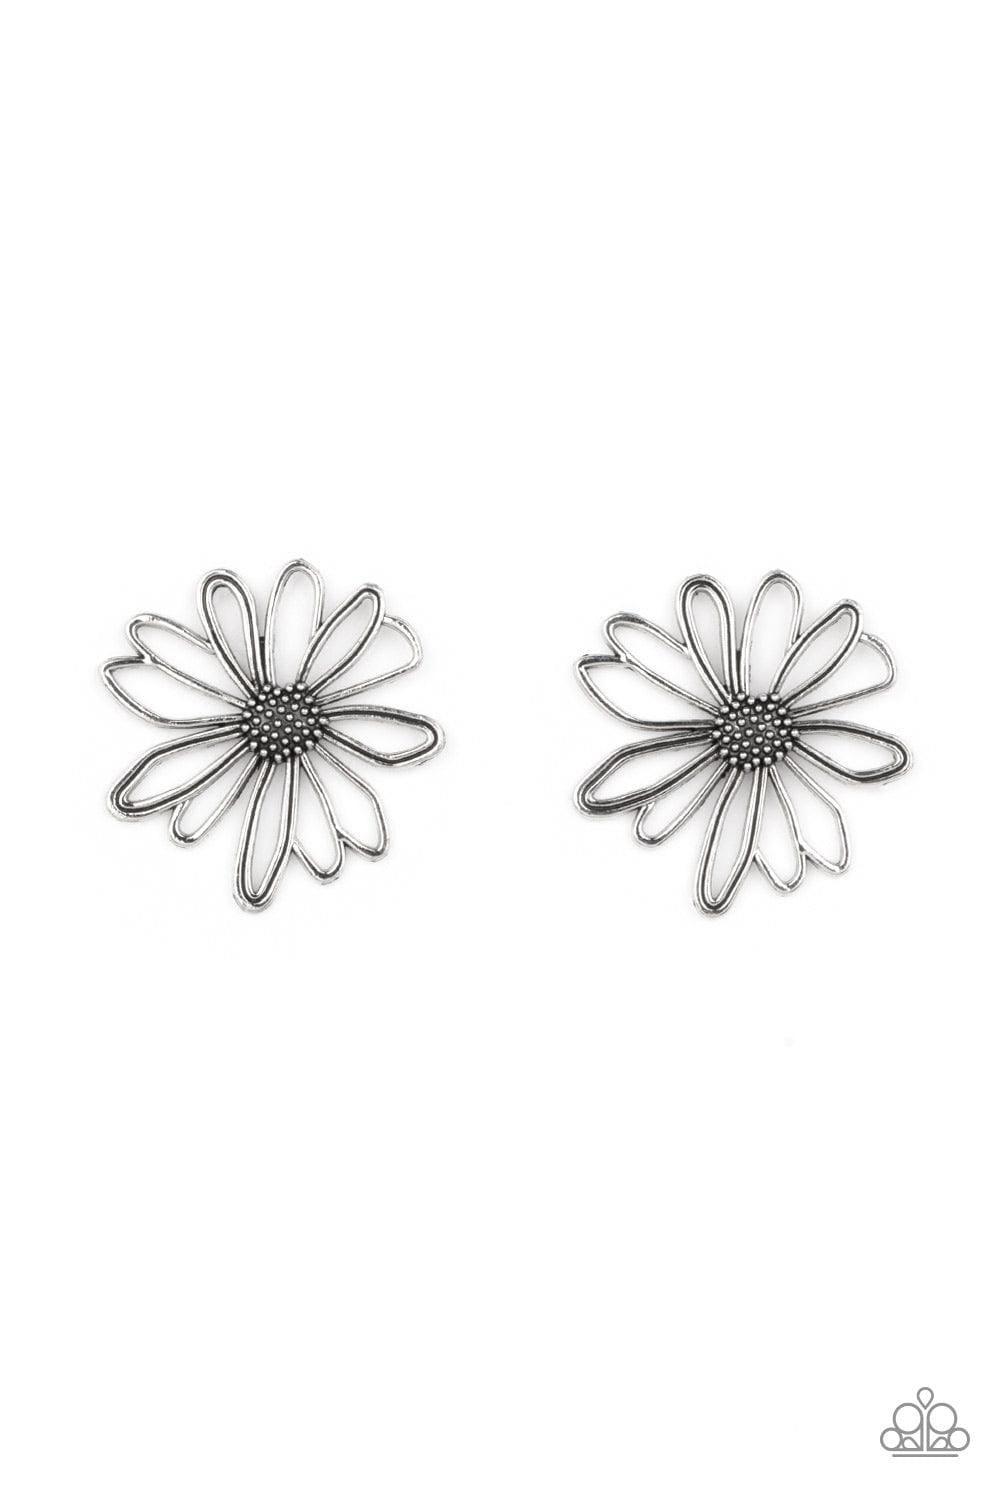 Paparazzi Accessories - Artisan Arbor - Silver Flower Earrings - Bling by JessieK